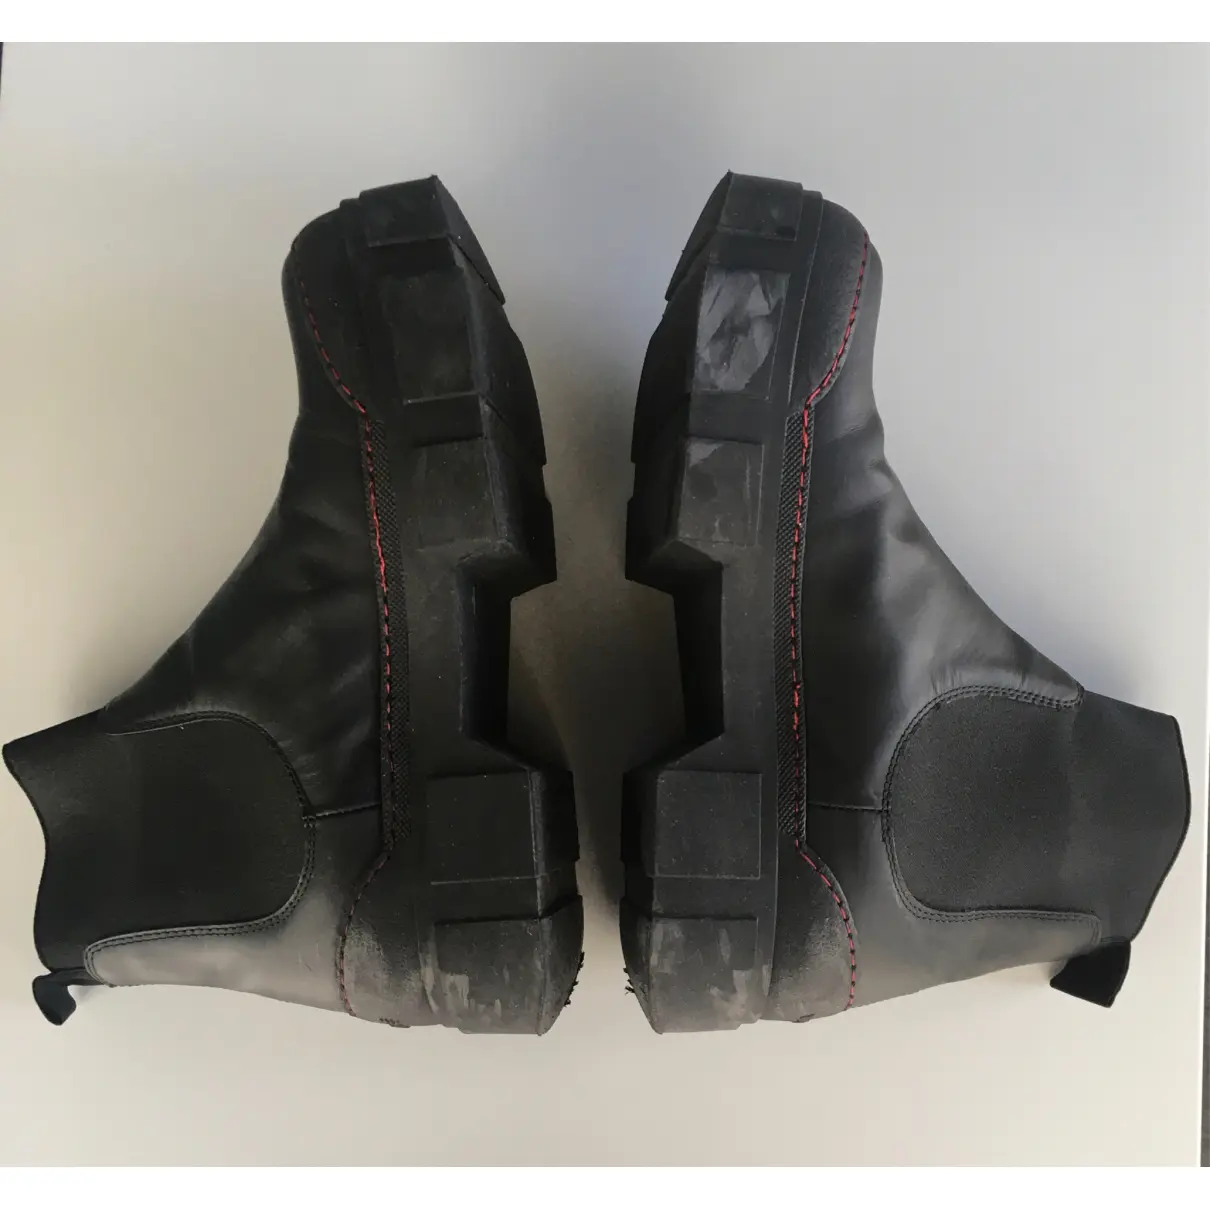 Buy Vic Matié Leather ankle boots online